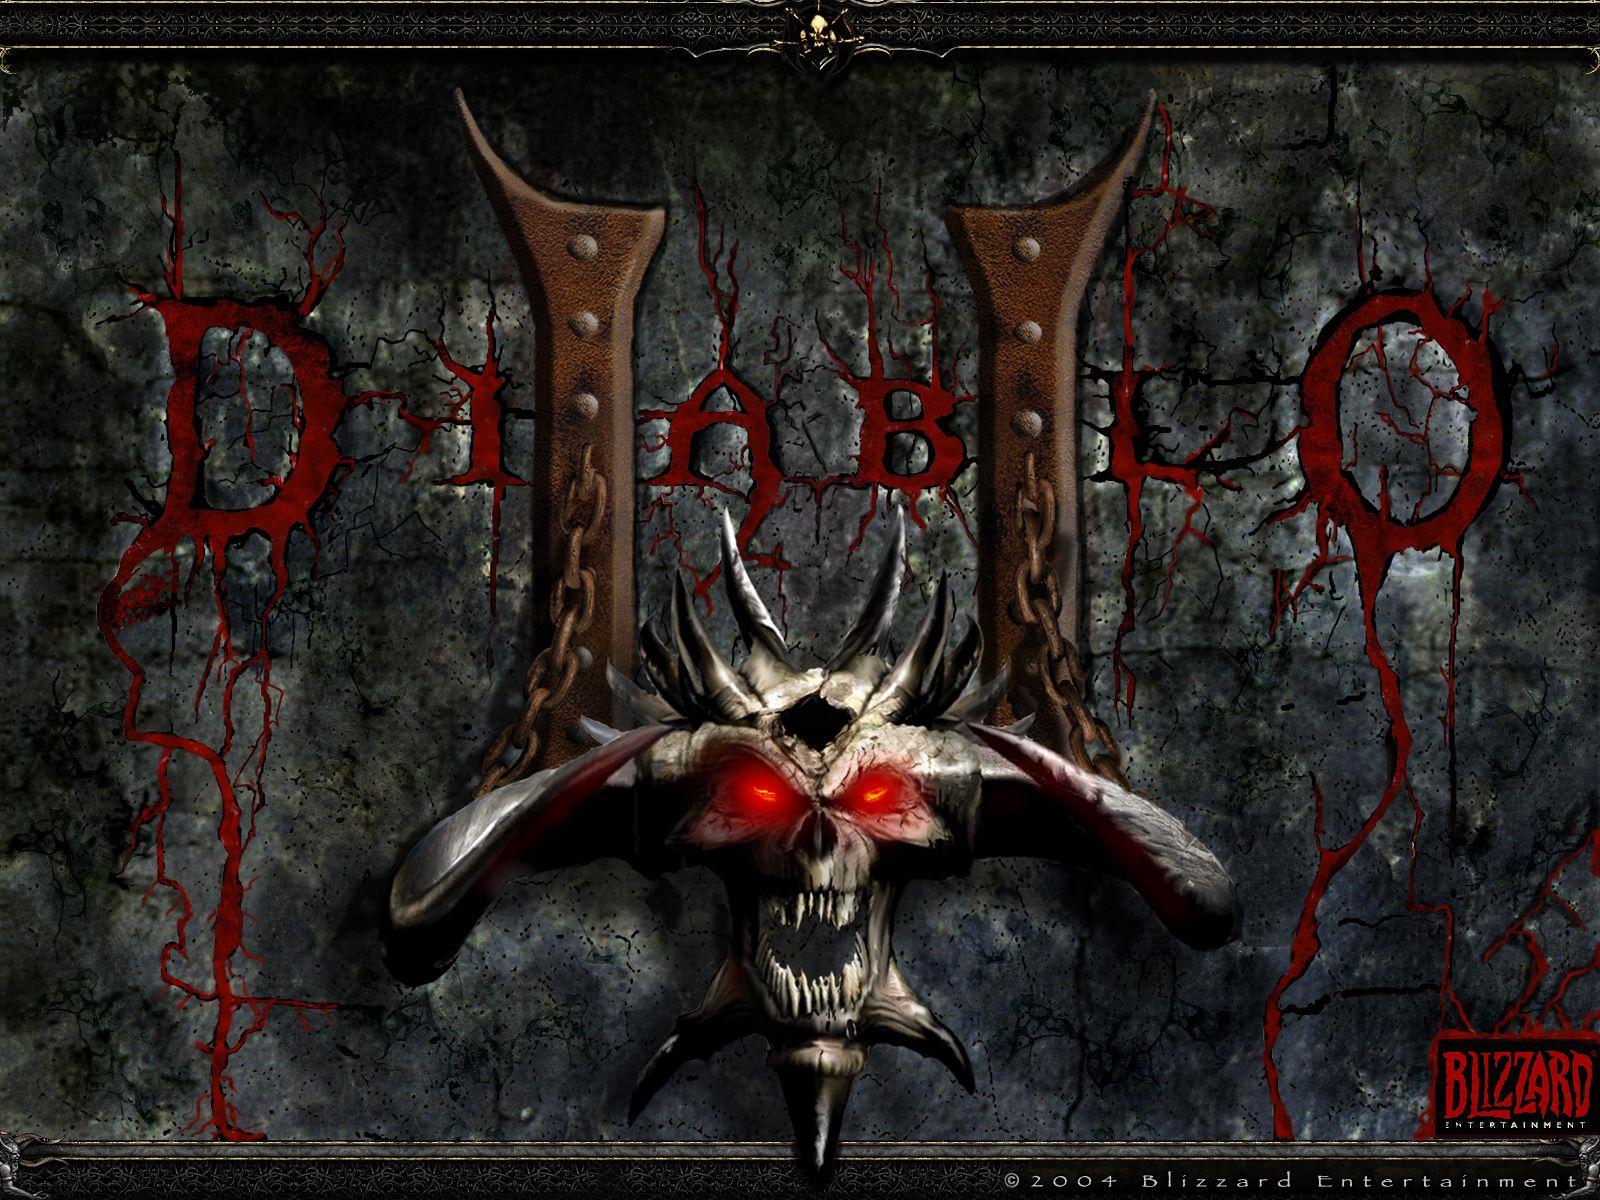 diablo 2 remastered download